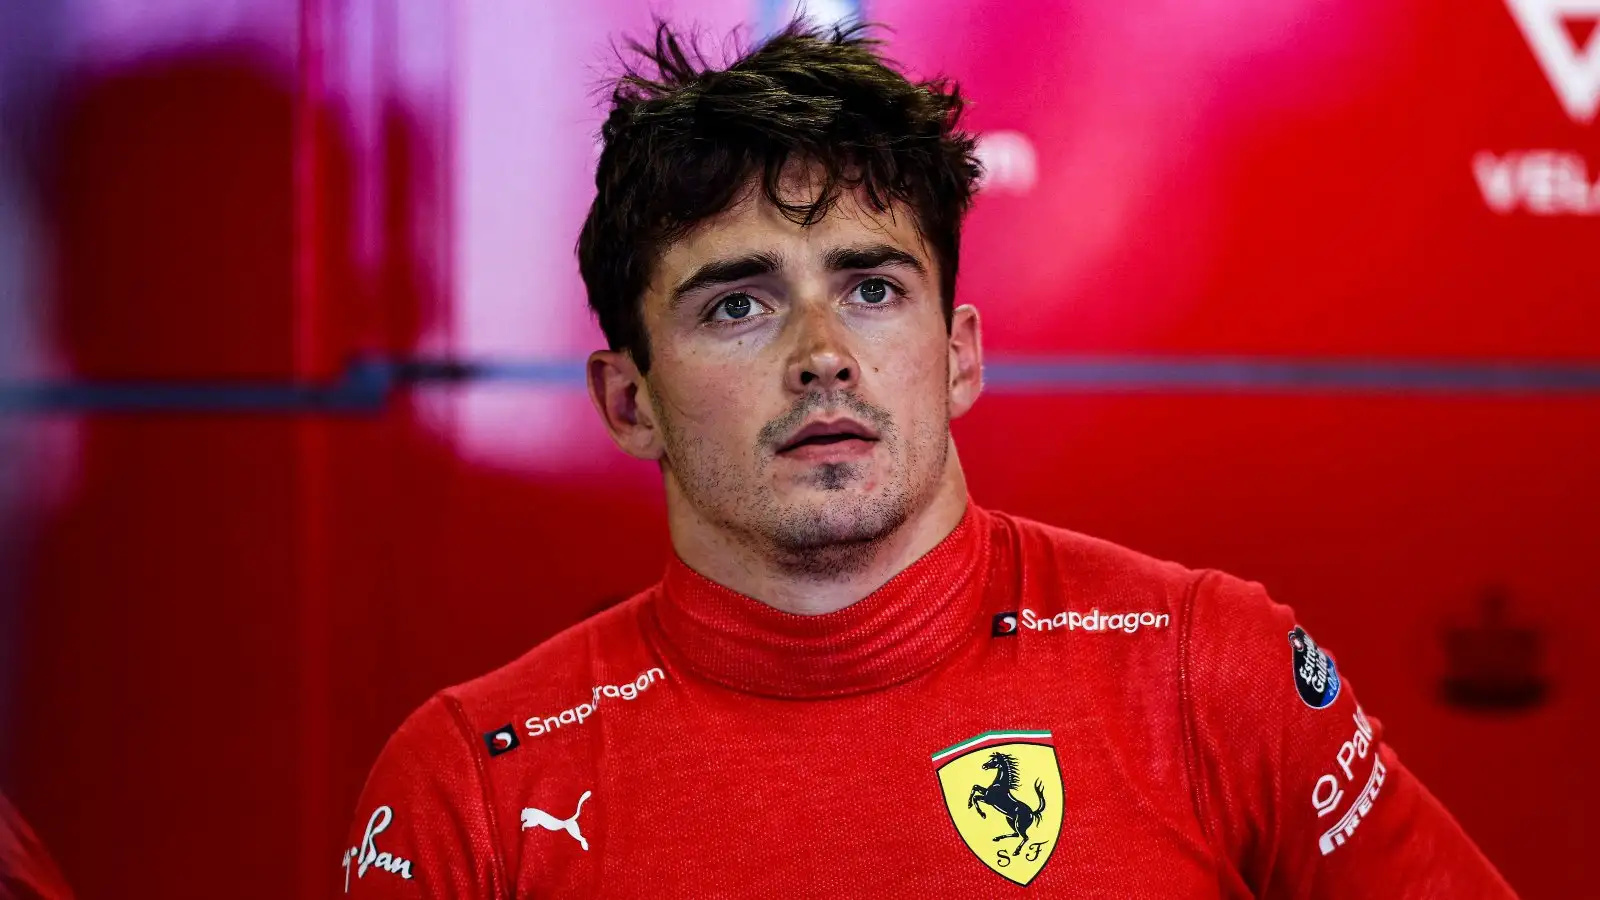 Leclerc Optimistic About Ferrari's Progress Against Red Bull in Miami F1 Race